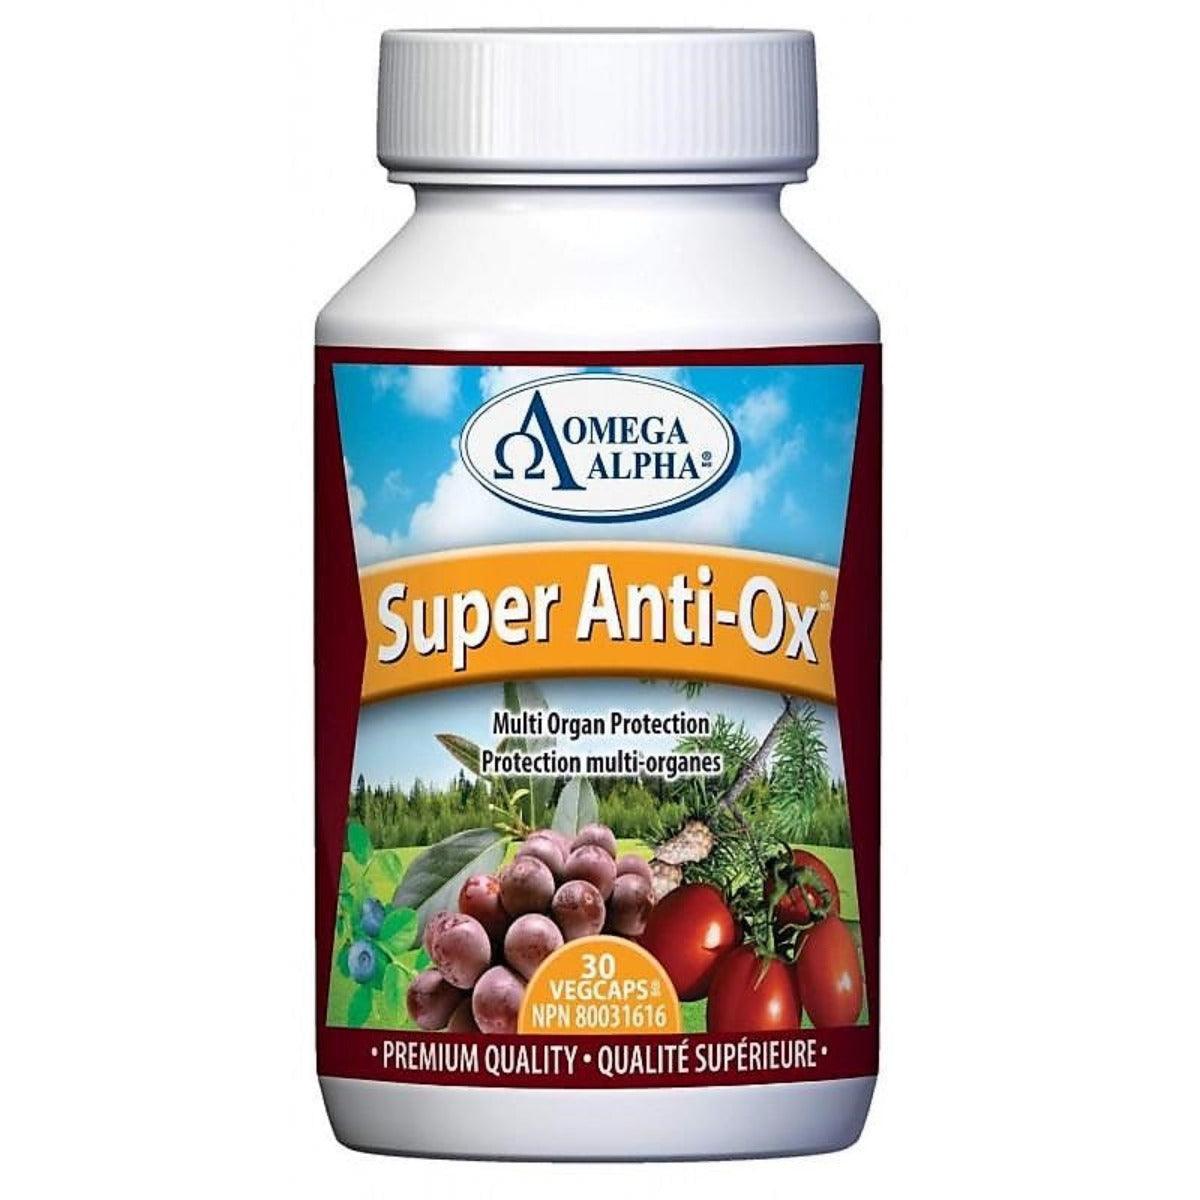 Omega Alpha Super Anti-Ox 30 veg caps Supplements at Village Vitamin Store